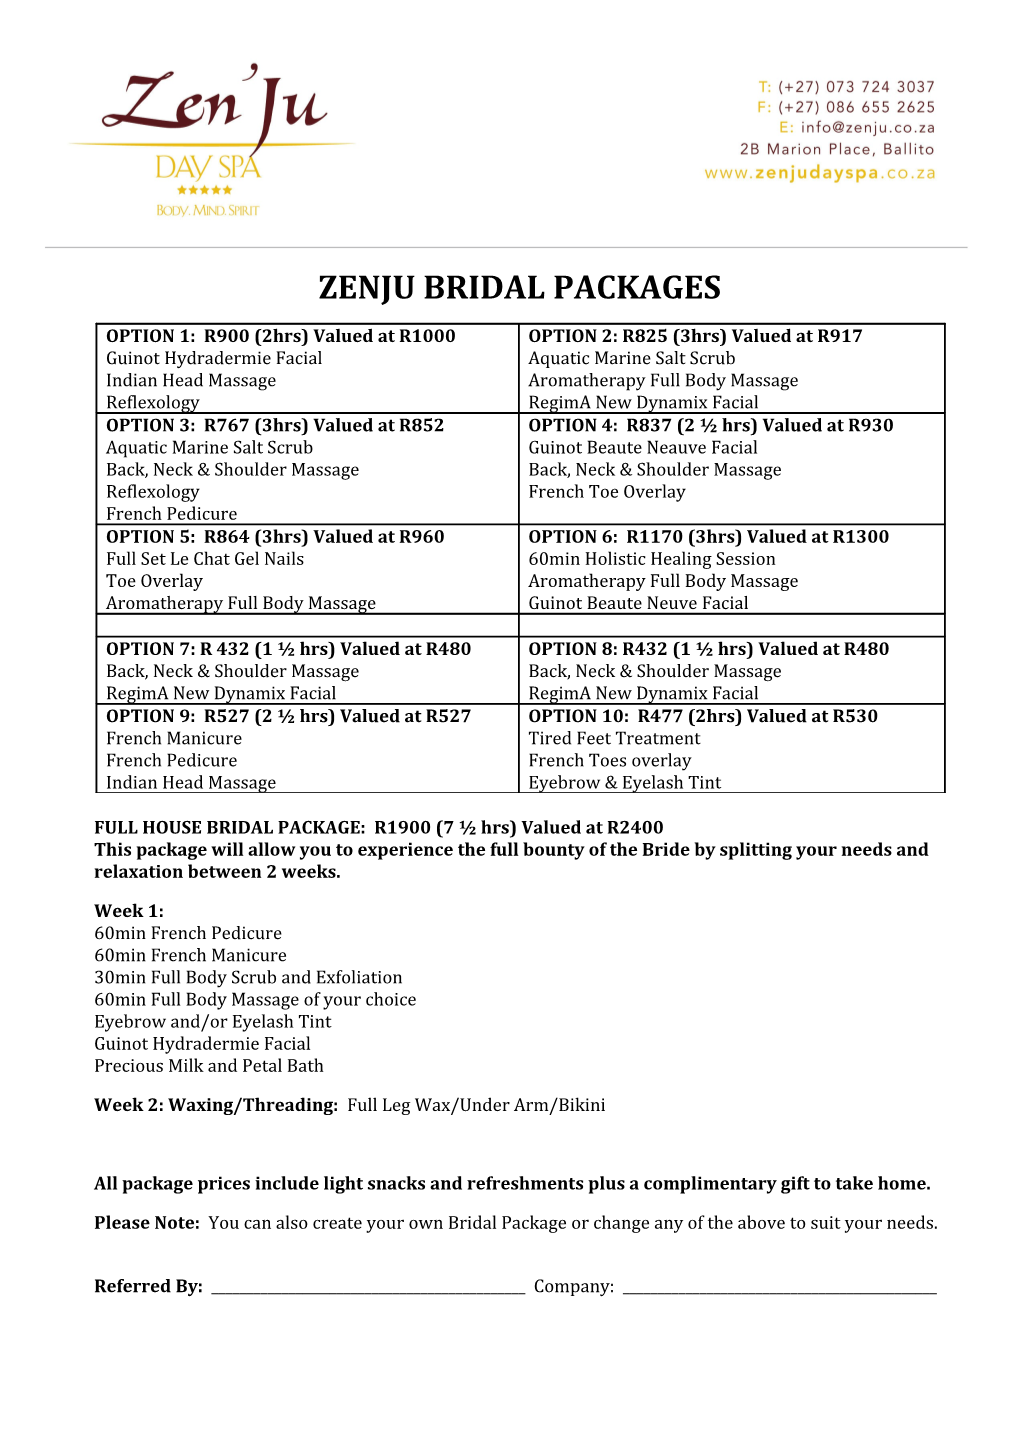 Zenju Bridal Packages